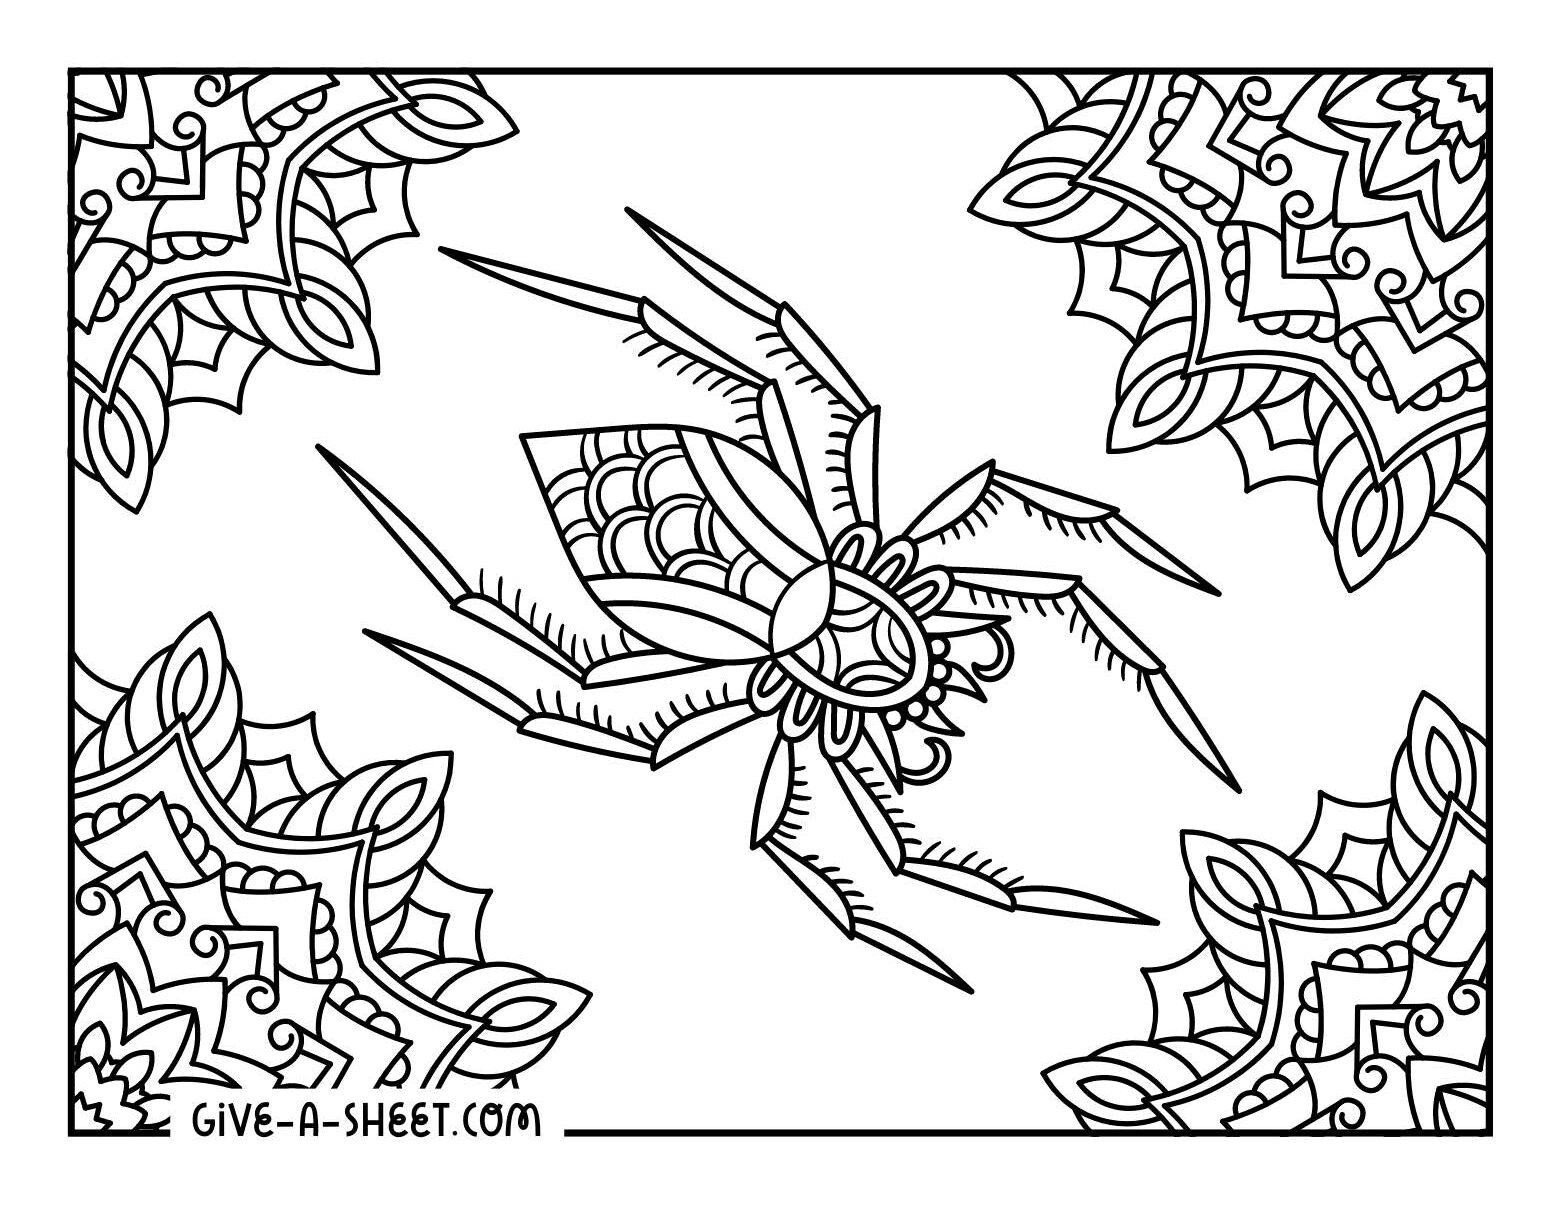 Detailed tarantula mandala coloring page for adults.